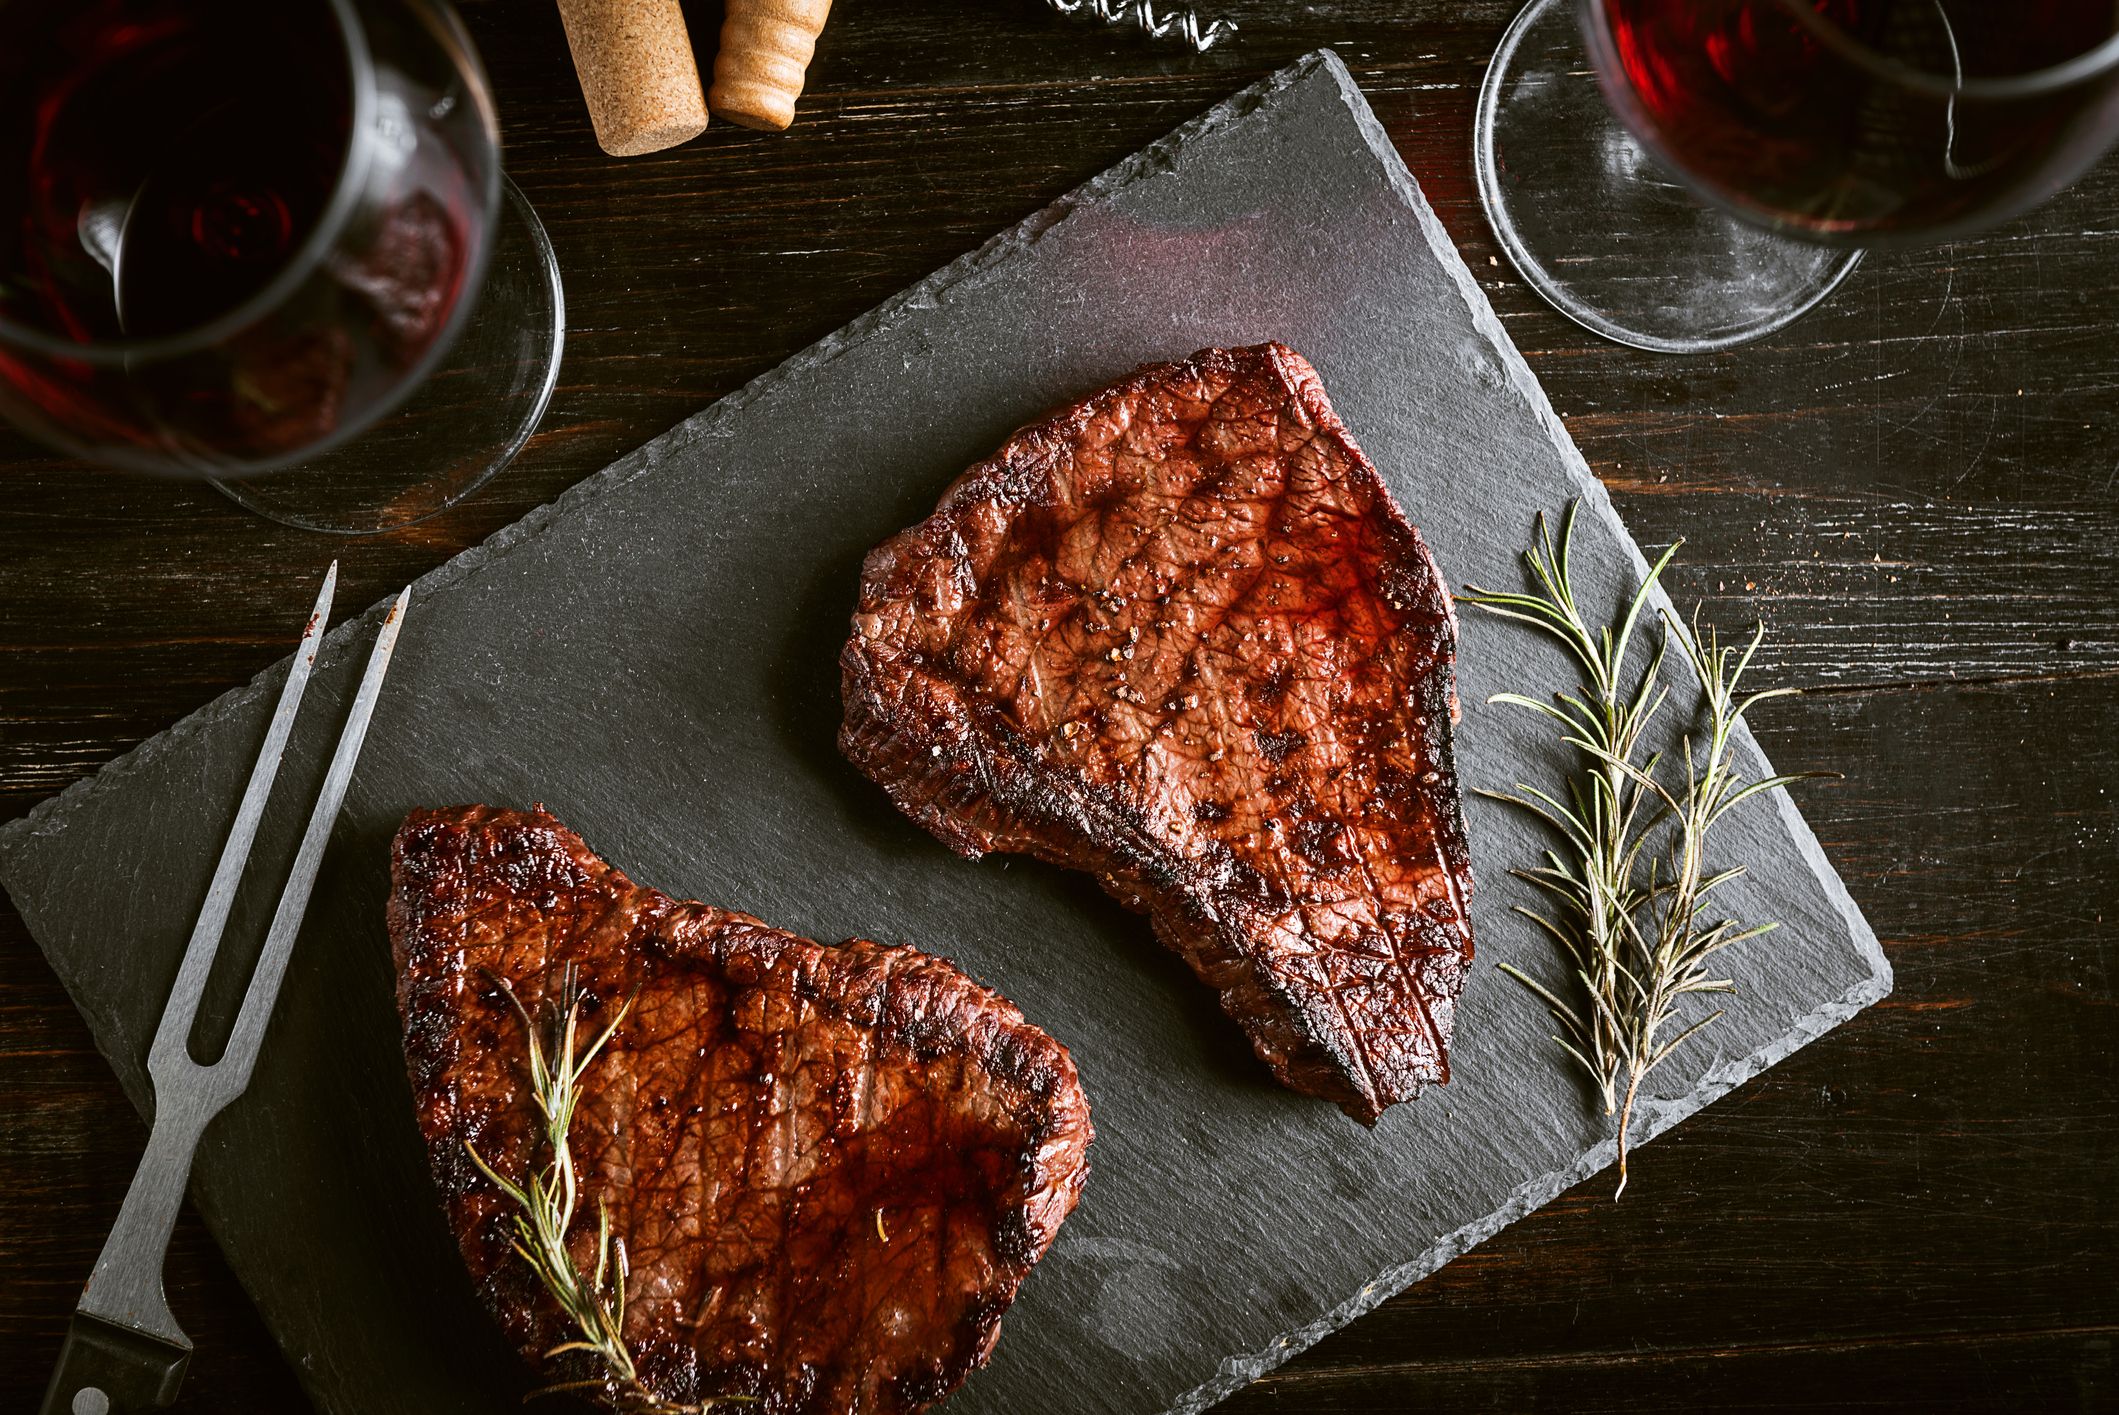 steaks-from-fresh-meat-royalty-free-image-981092086-1548713939.jpg